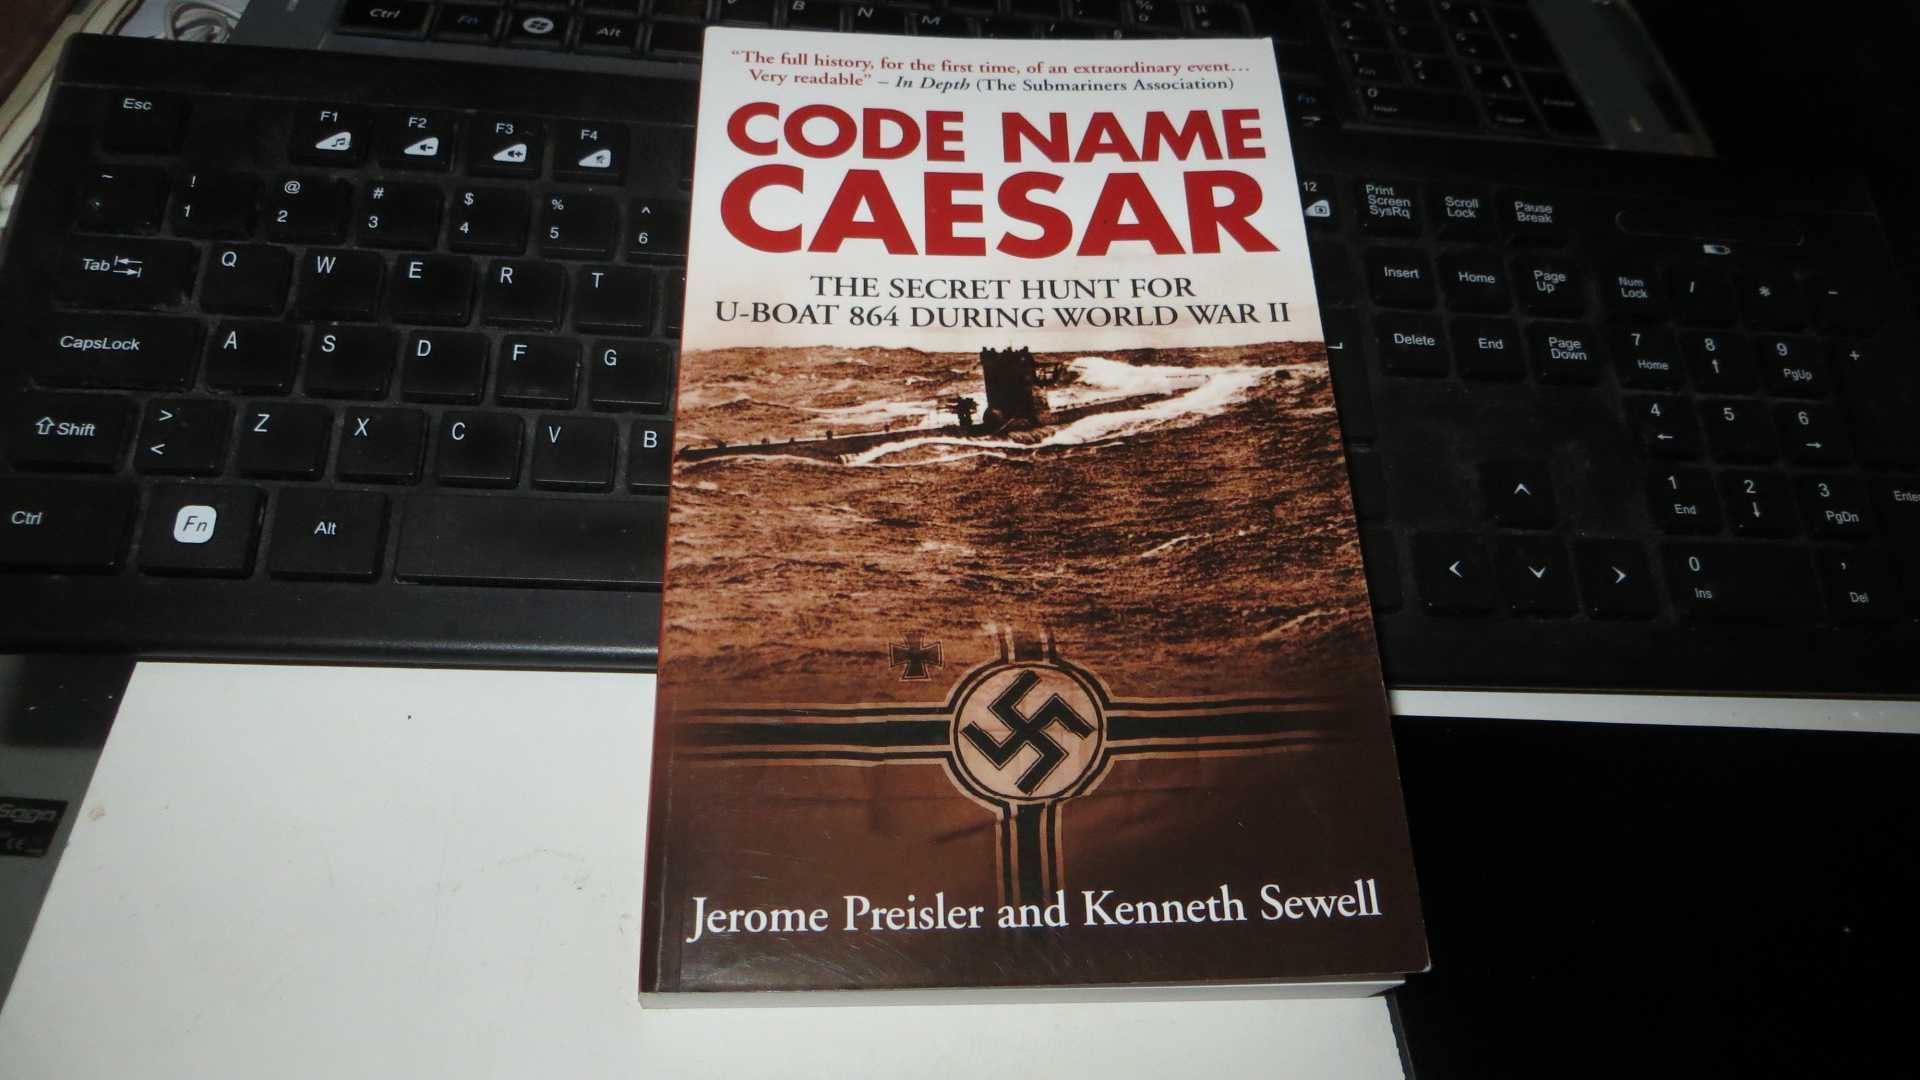 J. Preisler and K. Sewell "Code Name CAESAR" the hunt for U-Boat 864